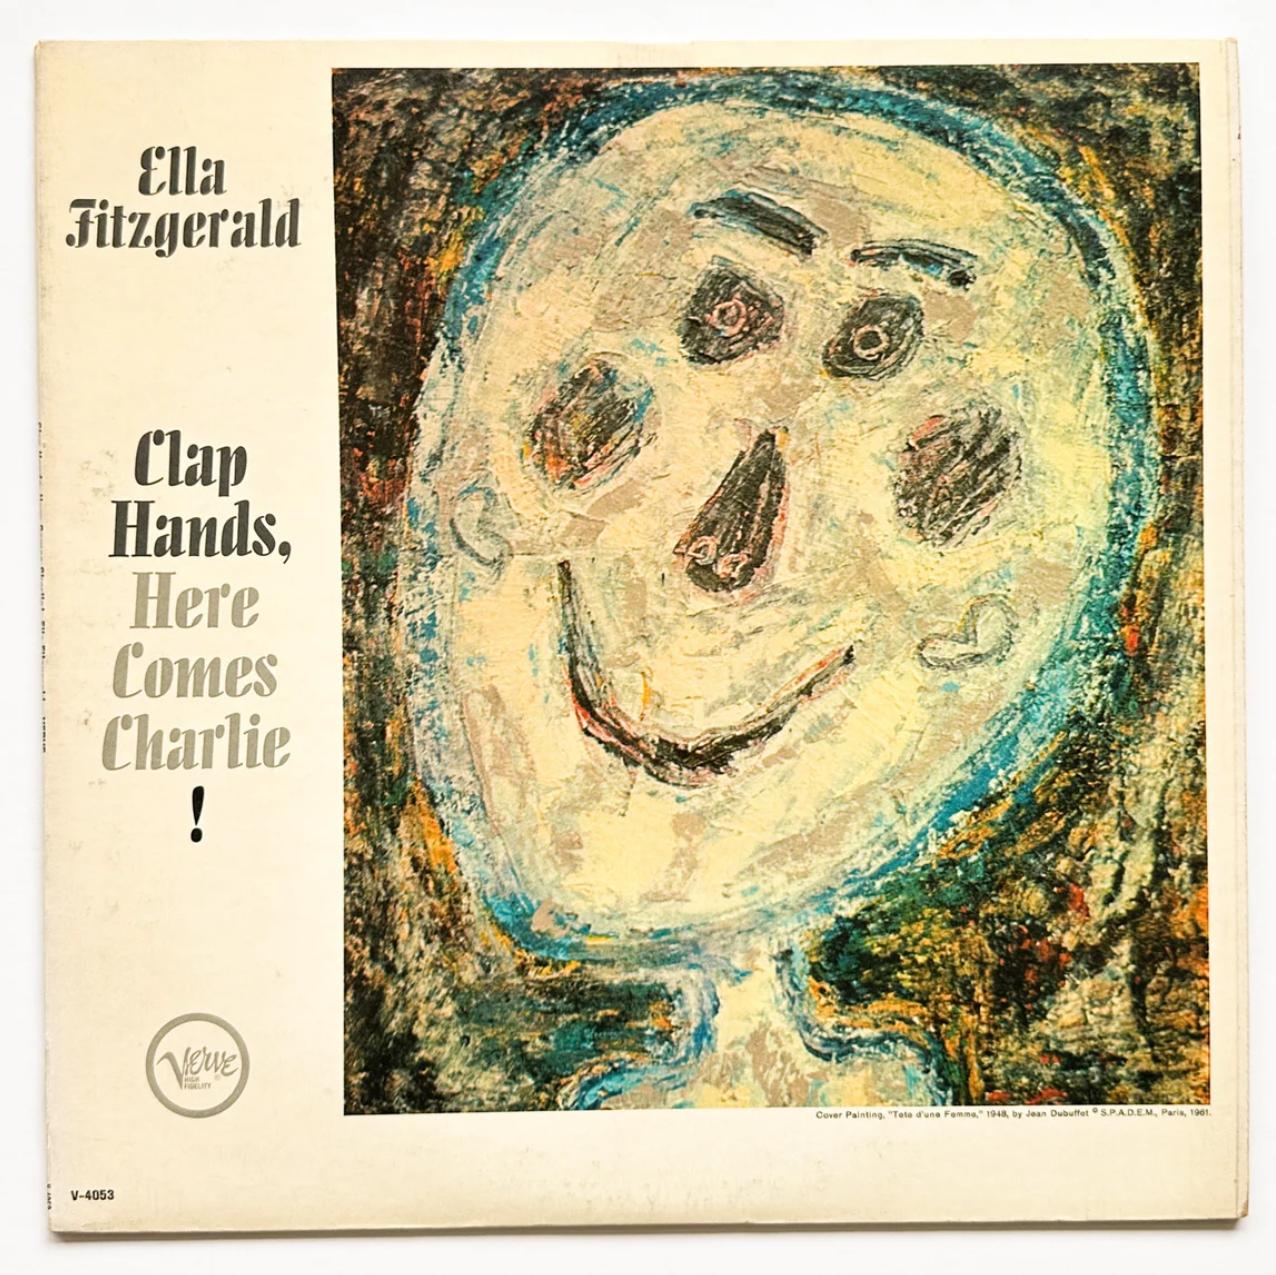 Ella Fitzgerald - Clap Hands, Here Comes Charlie! (1961)